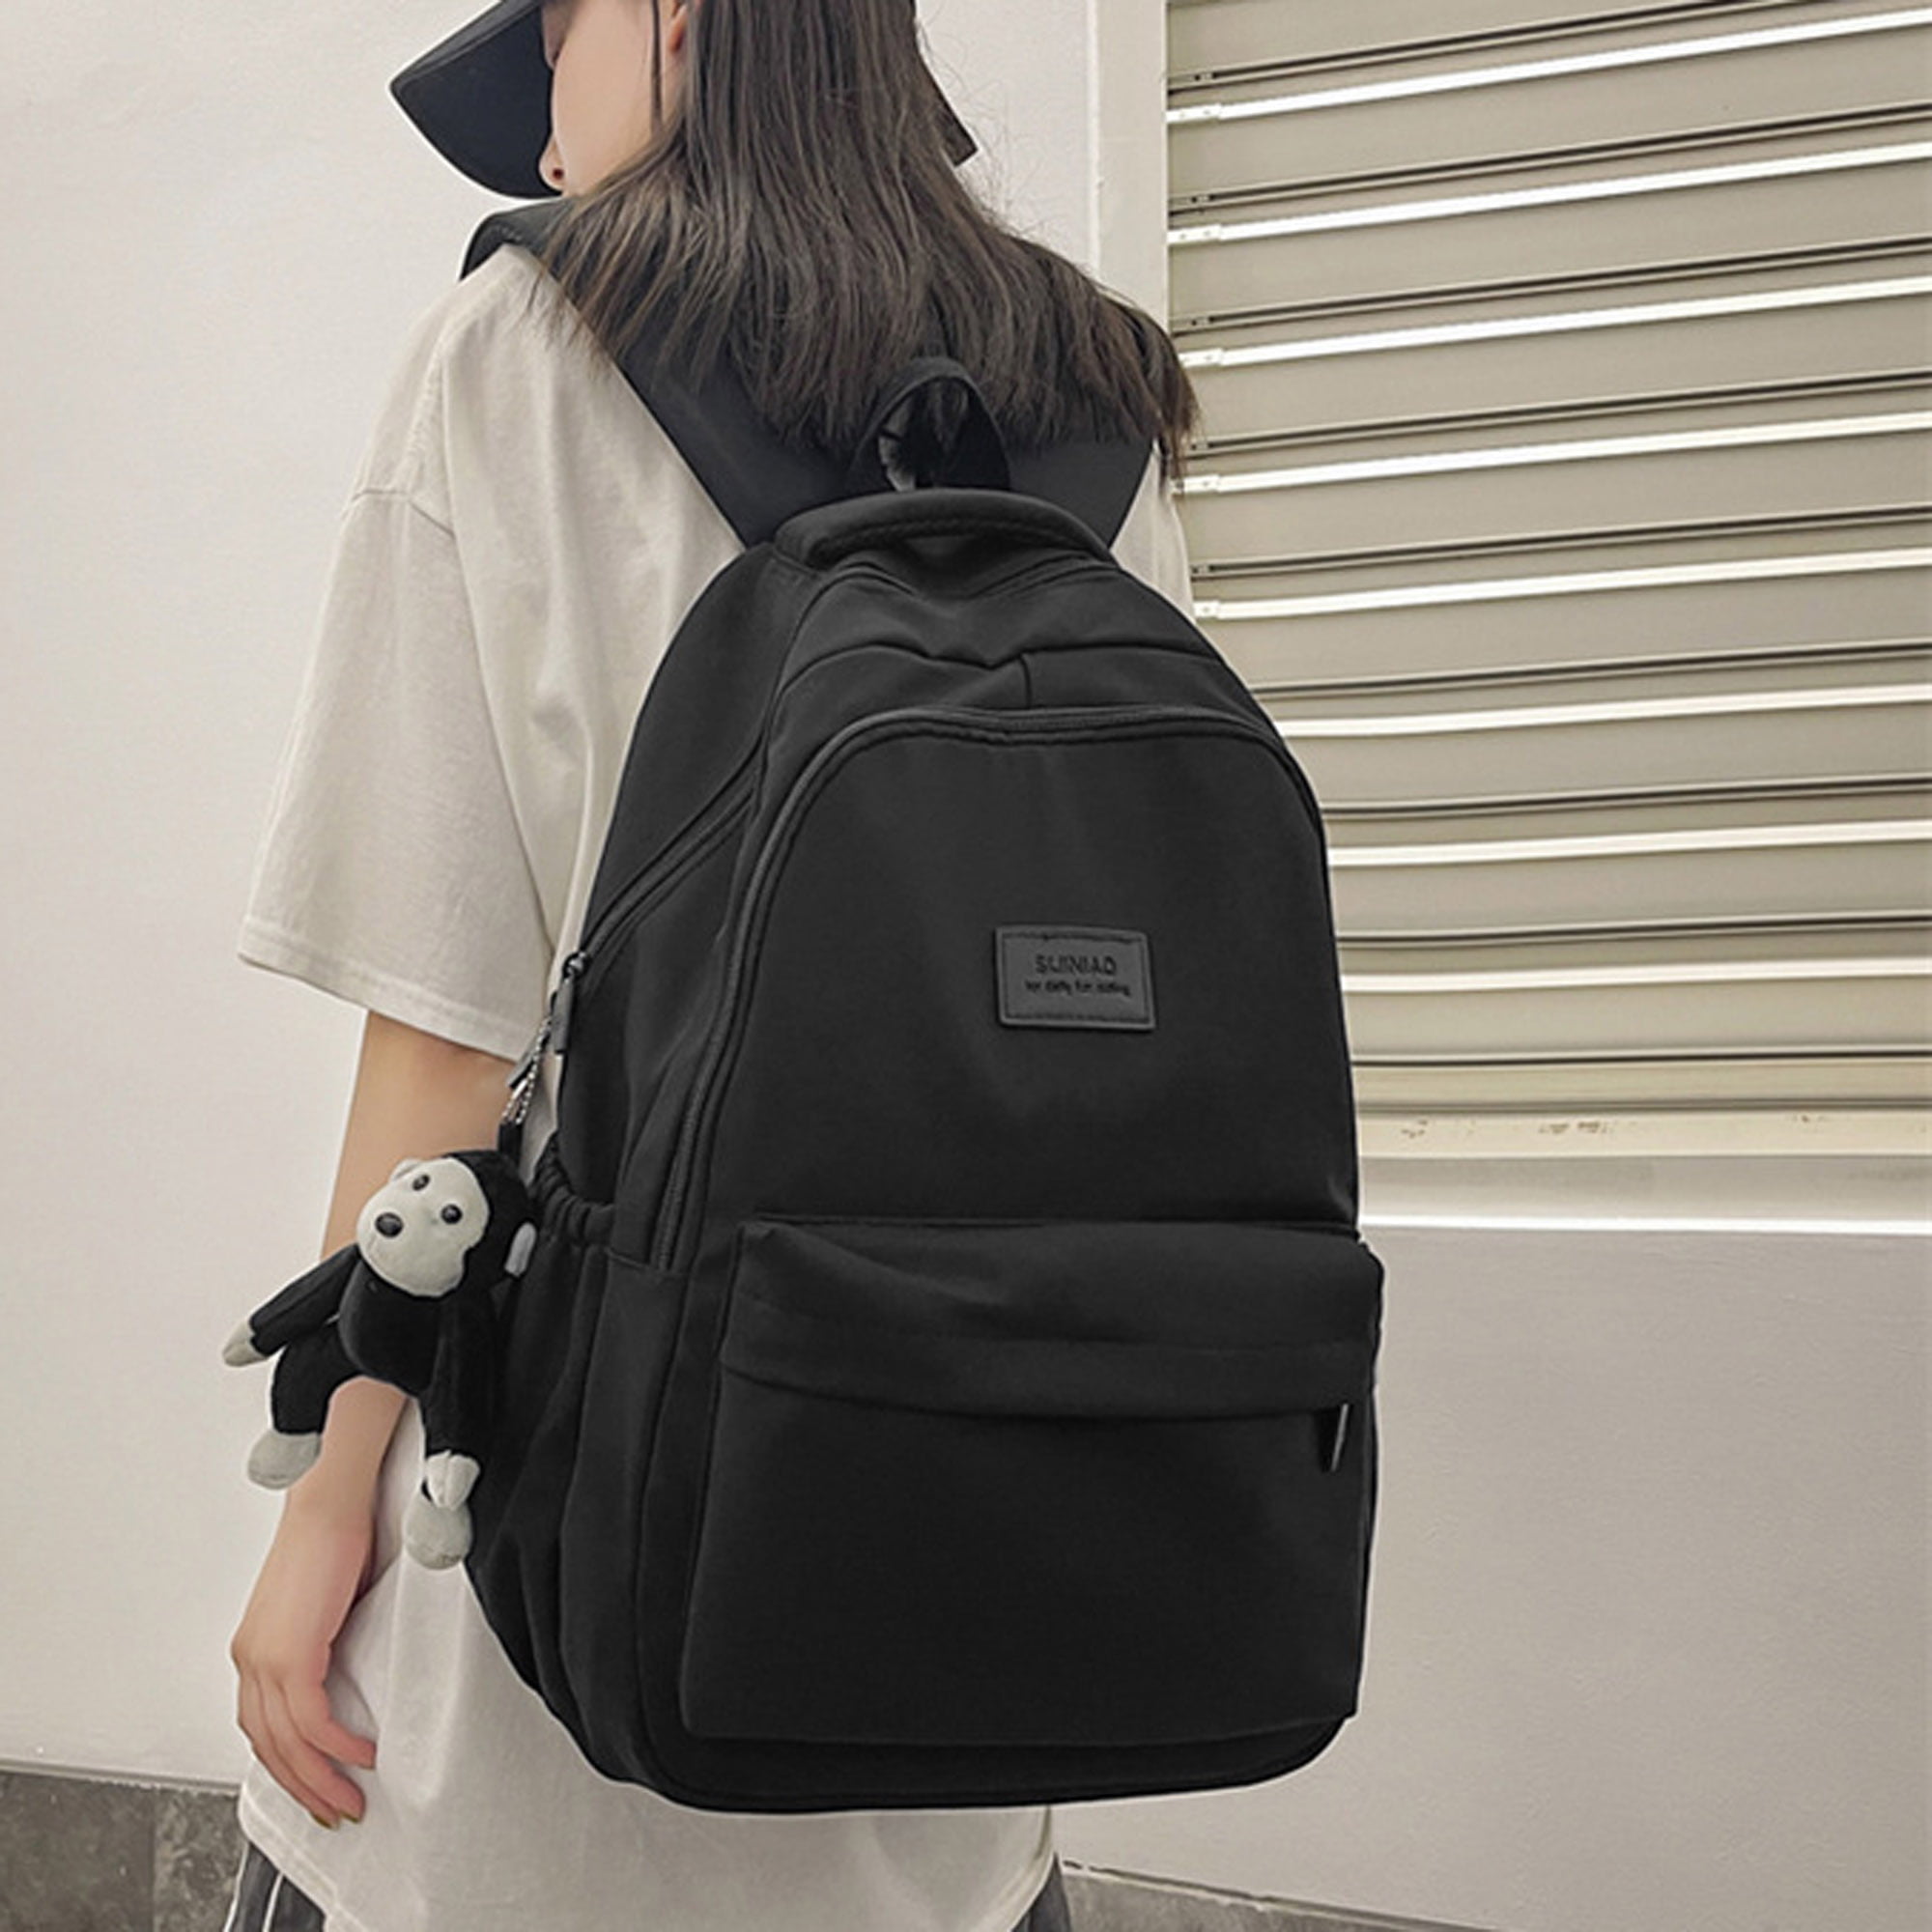 JOYPESSIE Female School Student Book Bag Travel Girls Rucksack Korean  Fashion Women Waterproof Backpack For Teenager Mochila